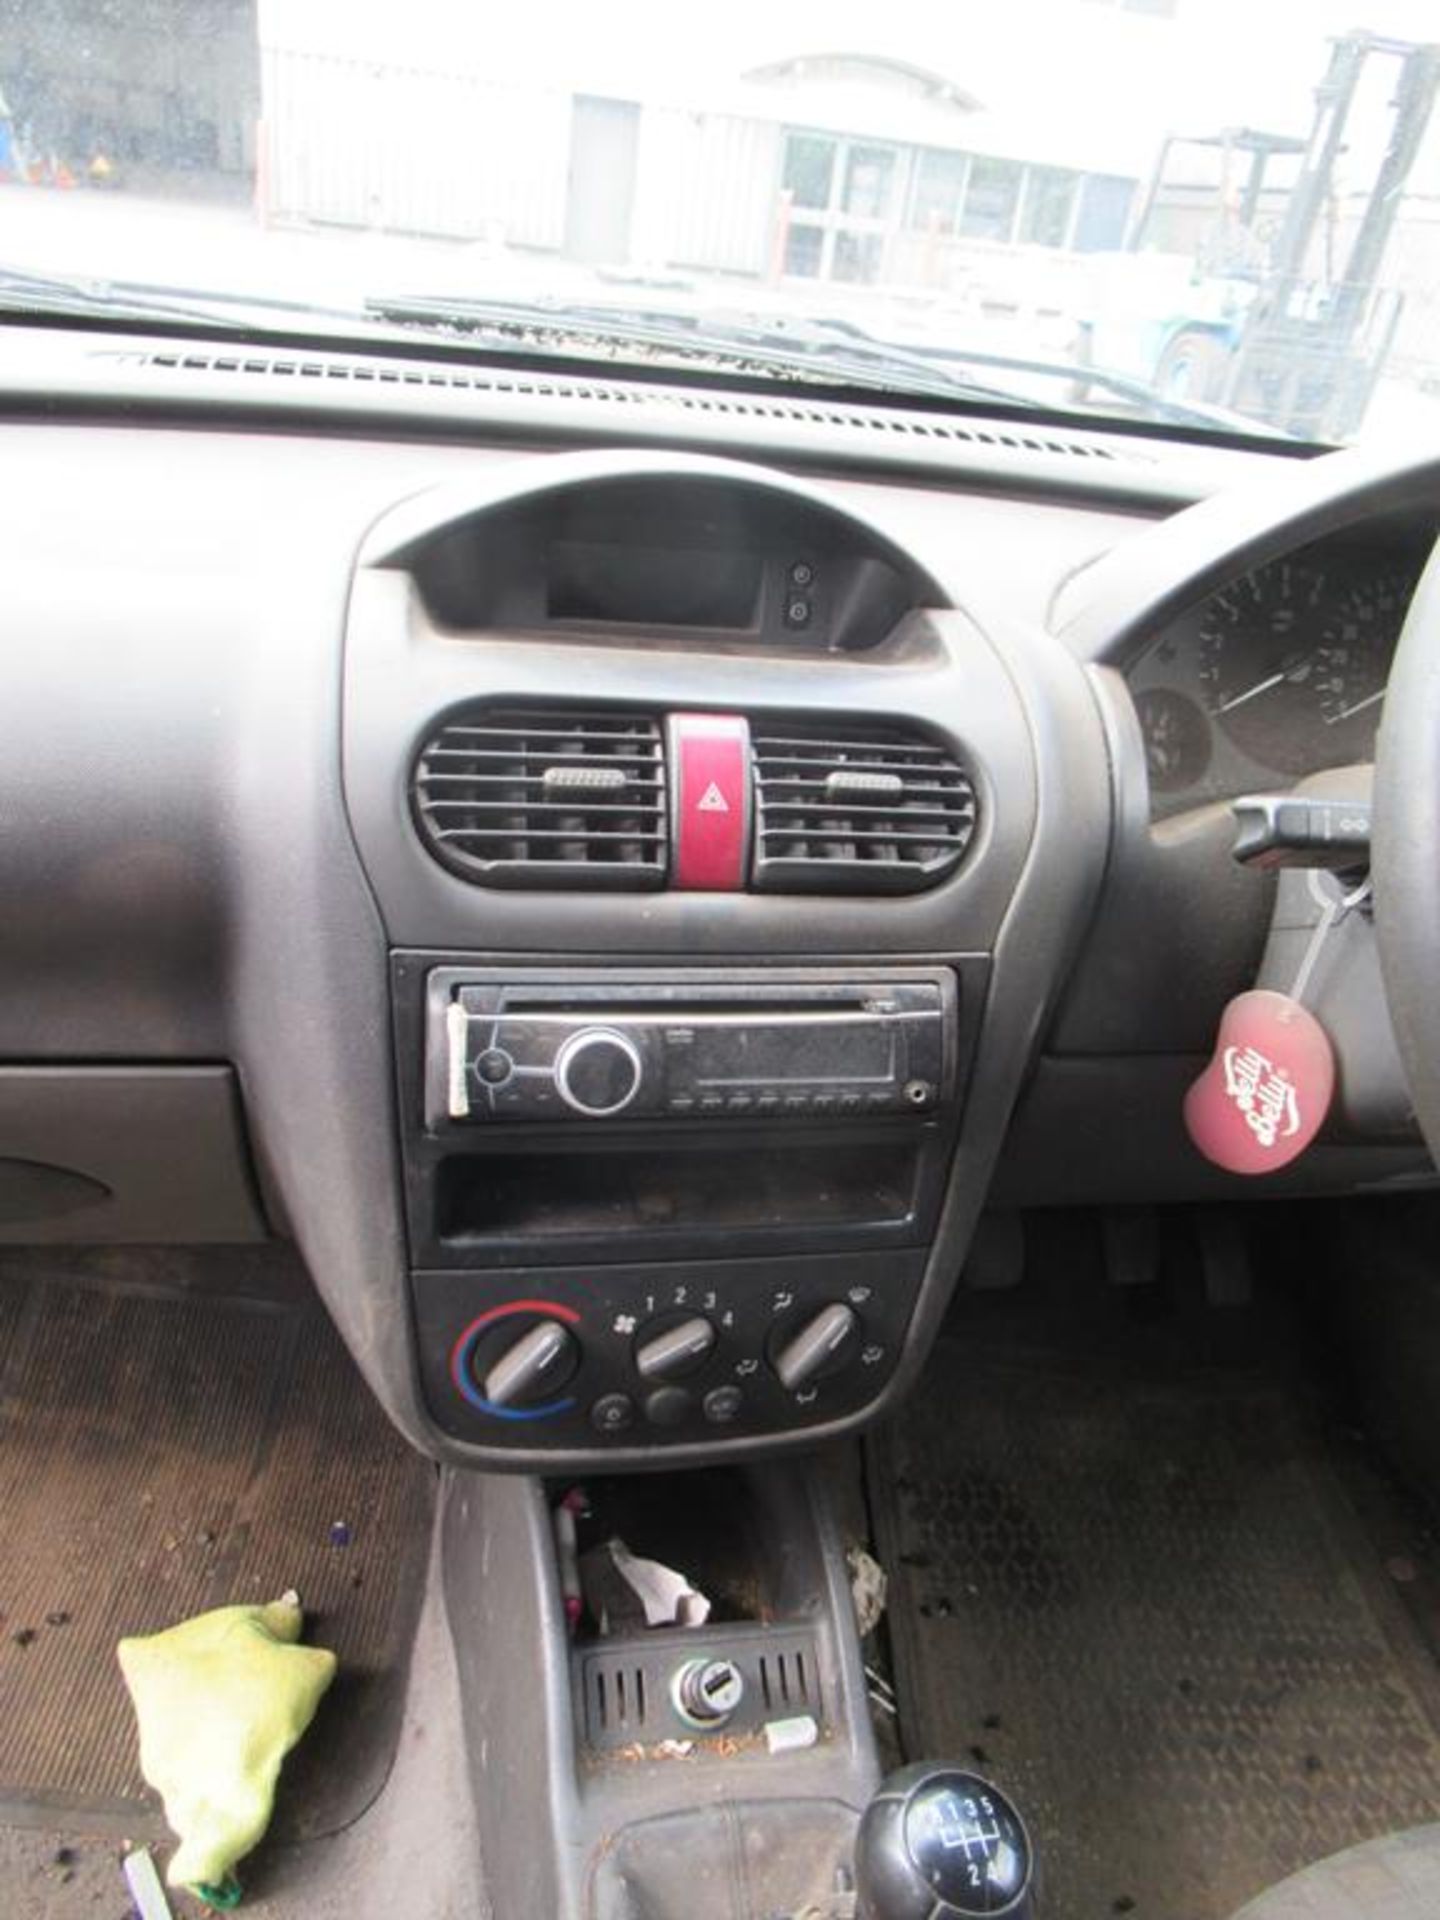 2004 Vauxhall Combo 2000 DI EU54 FFD Van - Image 12 of 14